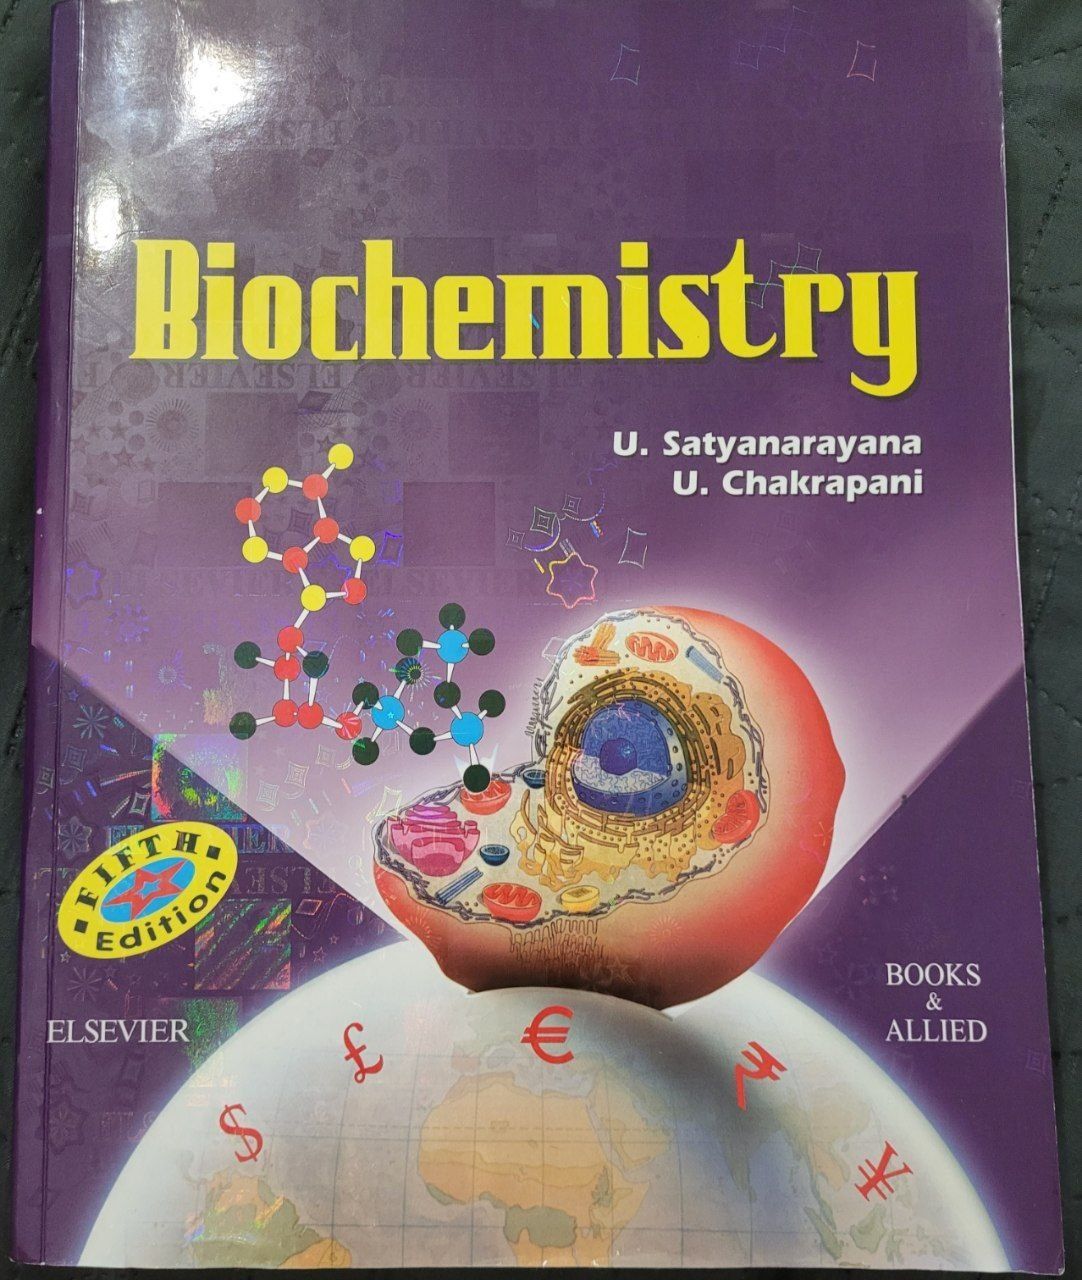 Biochemistry/ Біохімія U. Satyanarayana, U. Chakrapani 5e видання 2018